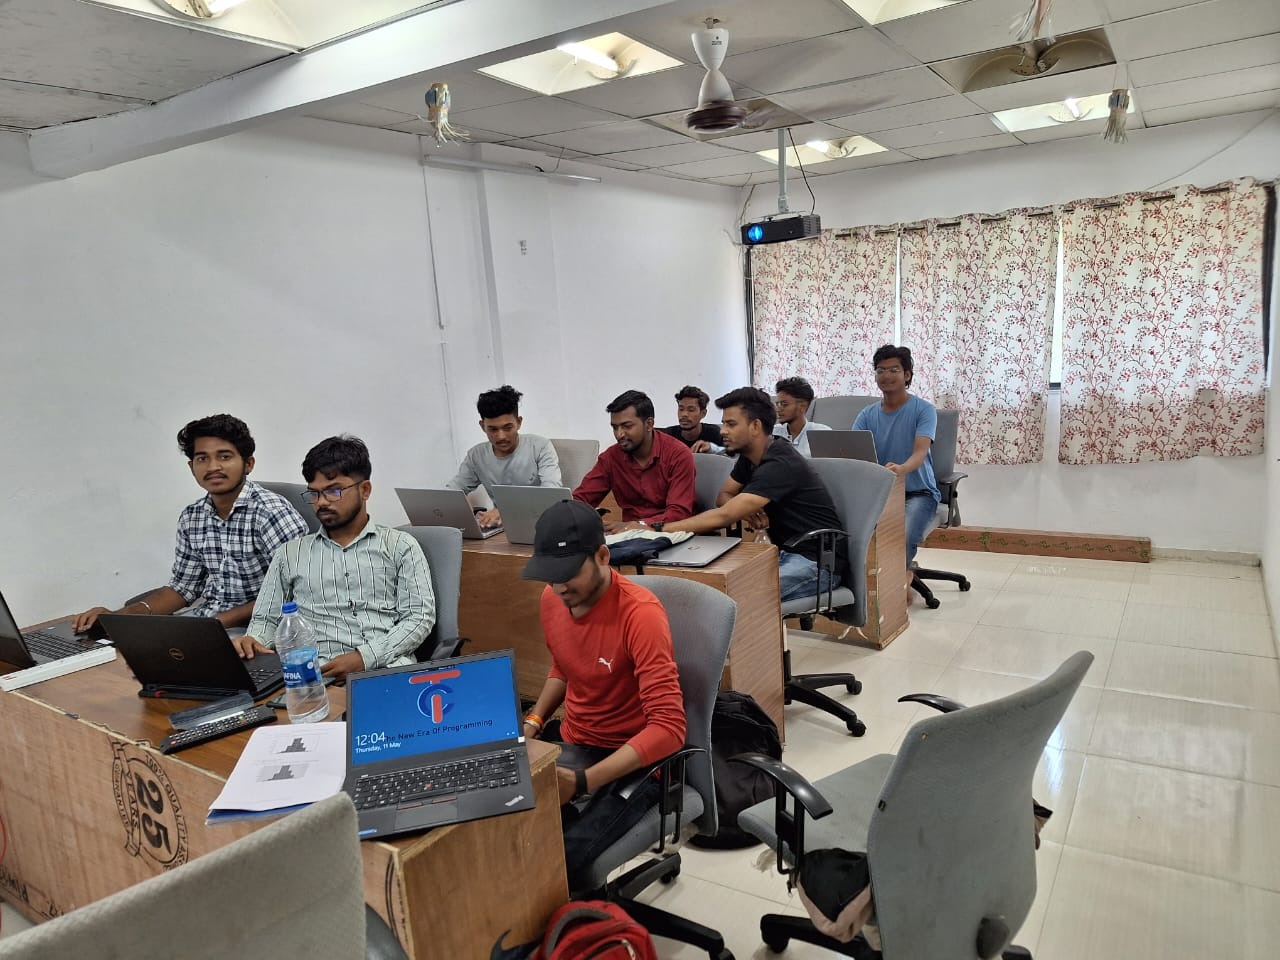 Python Training Institute In Shivaji Nagar